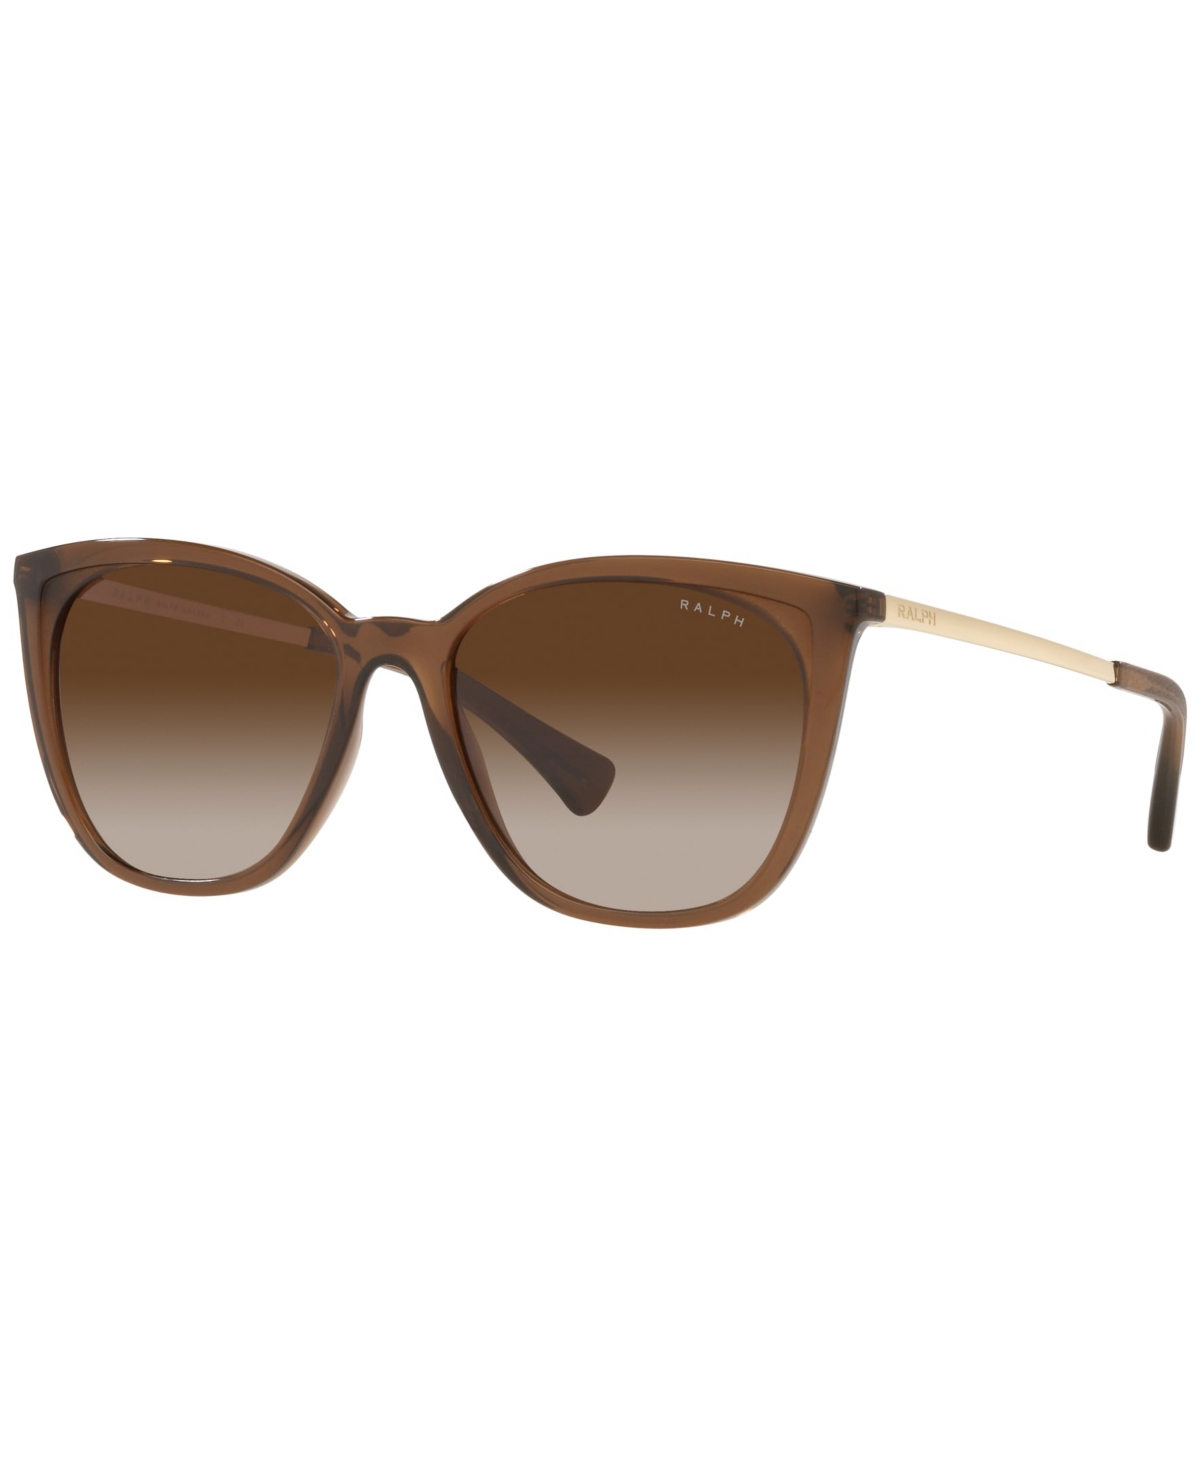 Women's Sunglasses, RA5280 - Transparent Brown